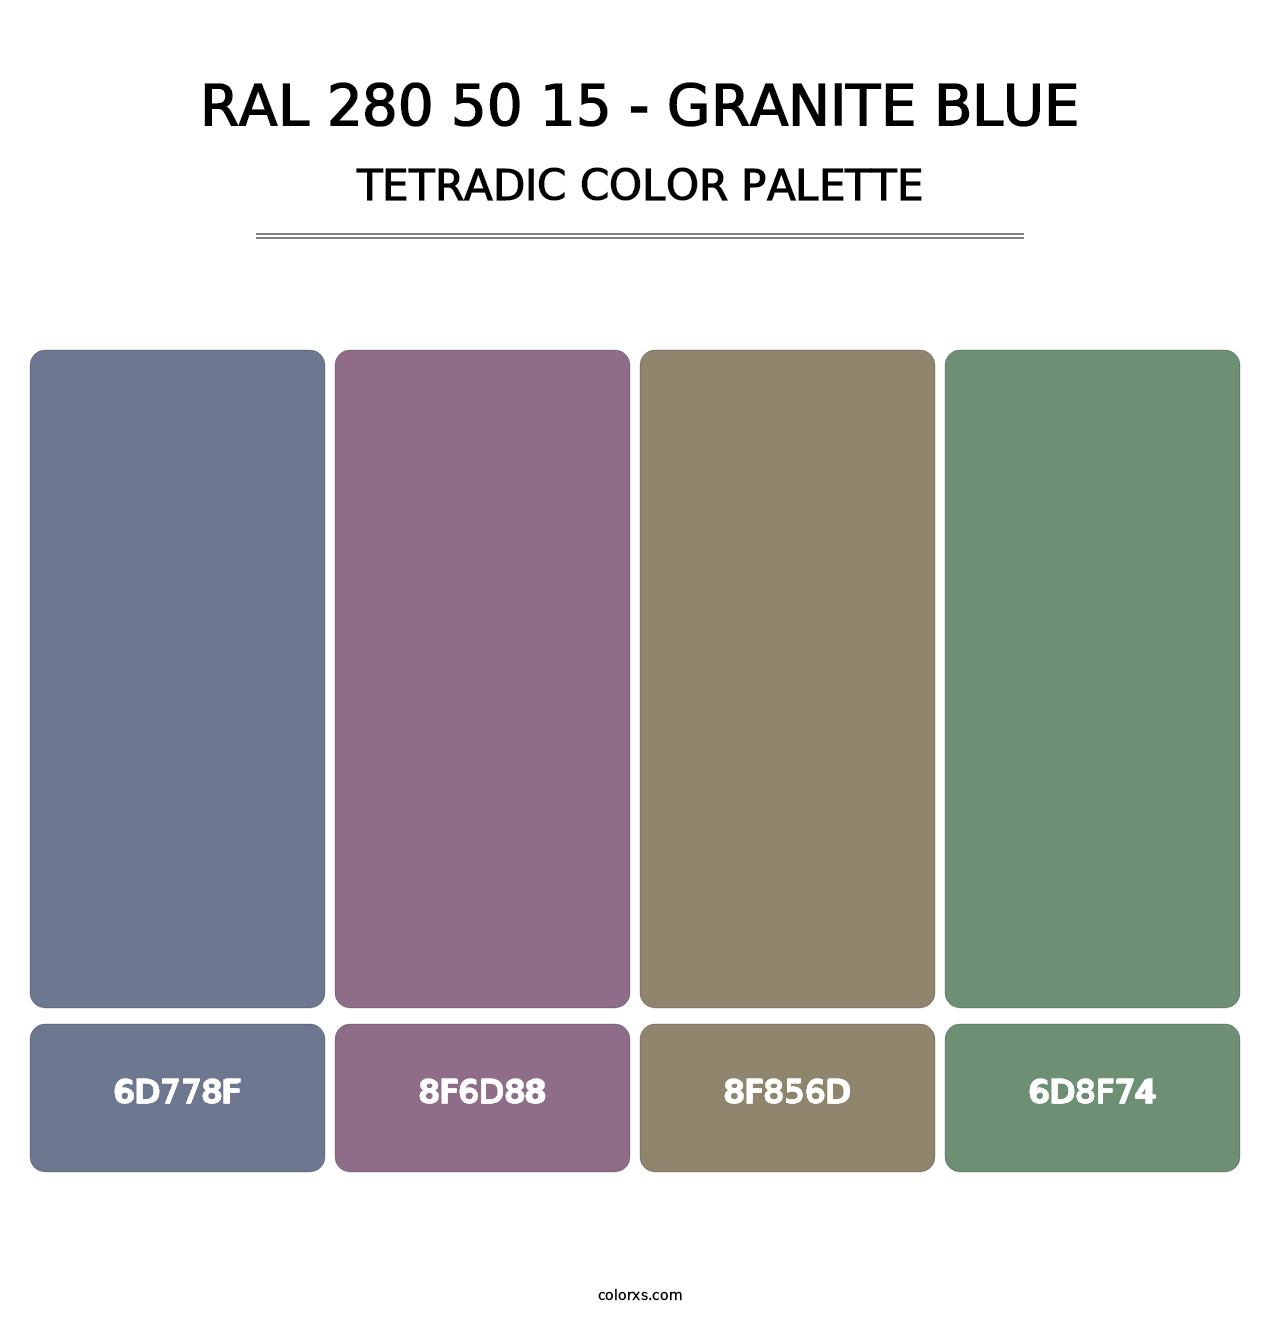 RAL 280 50 15 - Granite Blue - Tetradic Color Palette